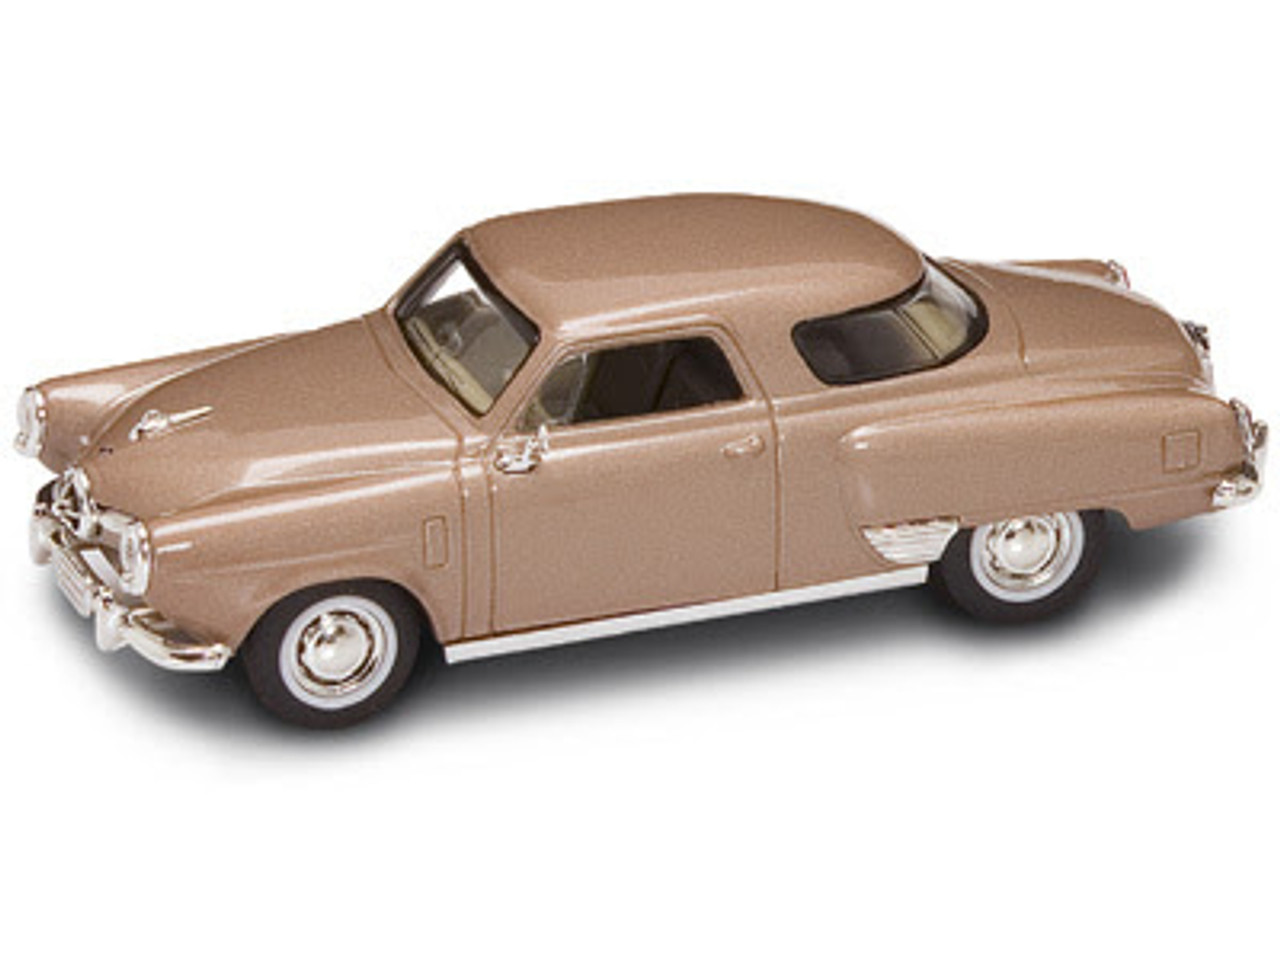 1/43 Road Signature 1950 Studebaker Champion (Tan) Diecast Car Model